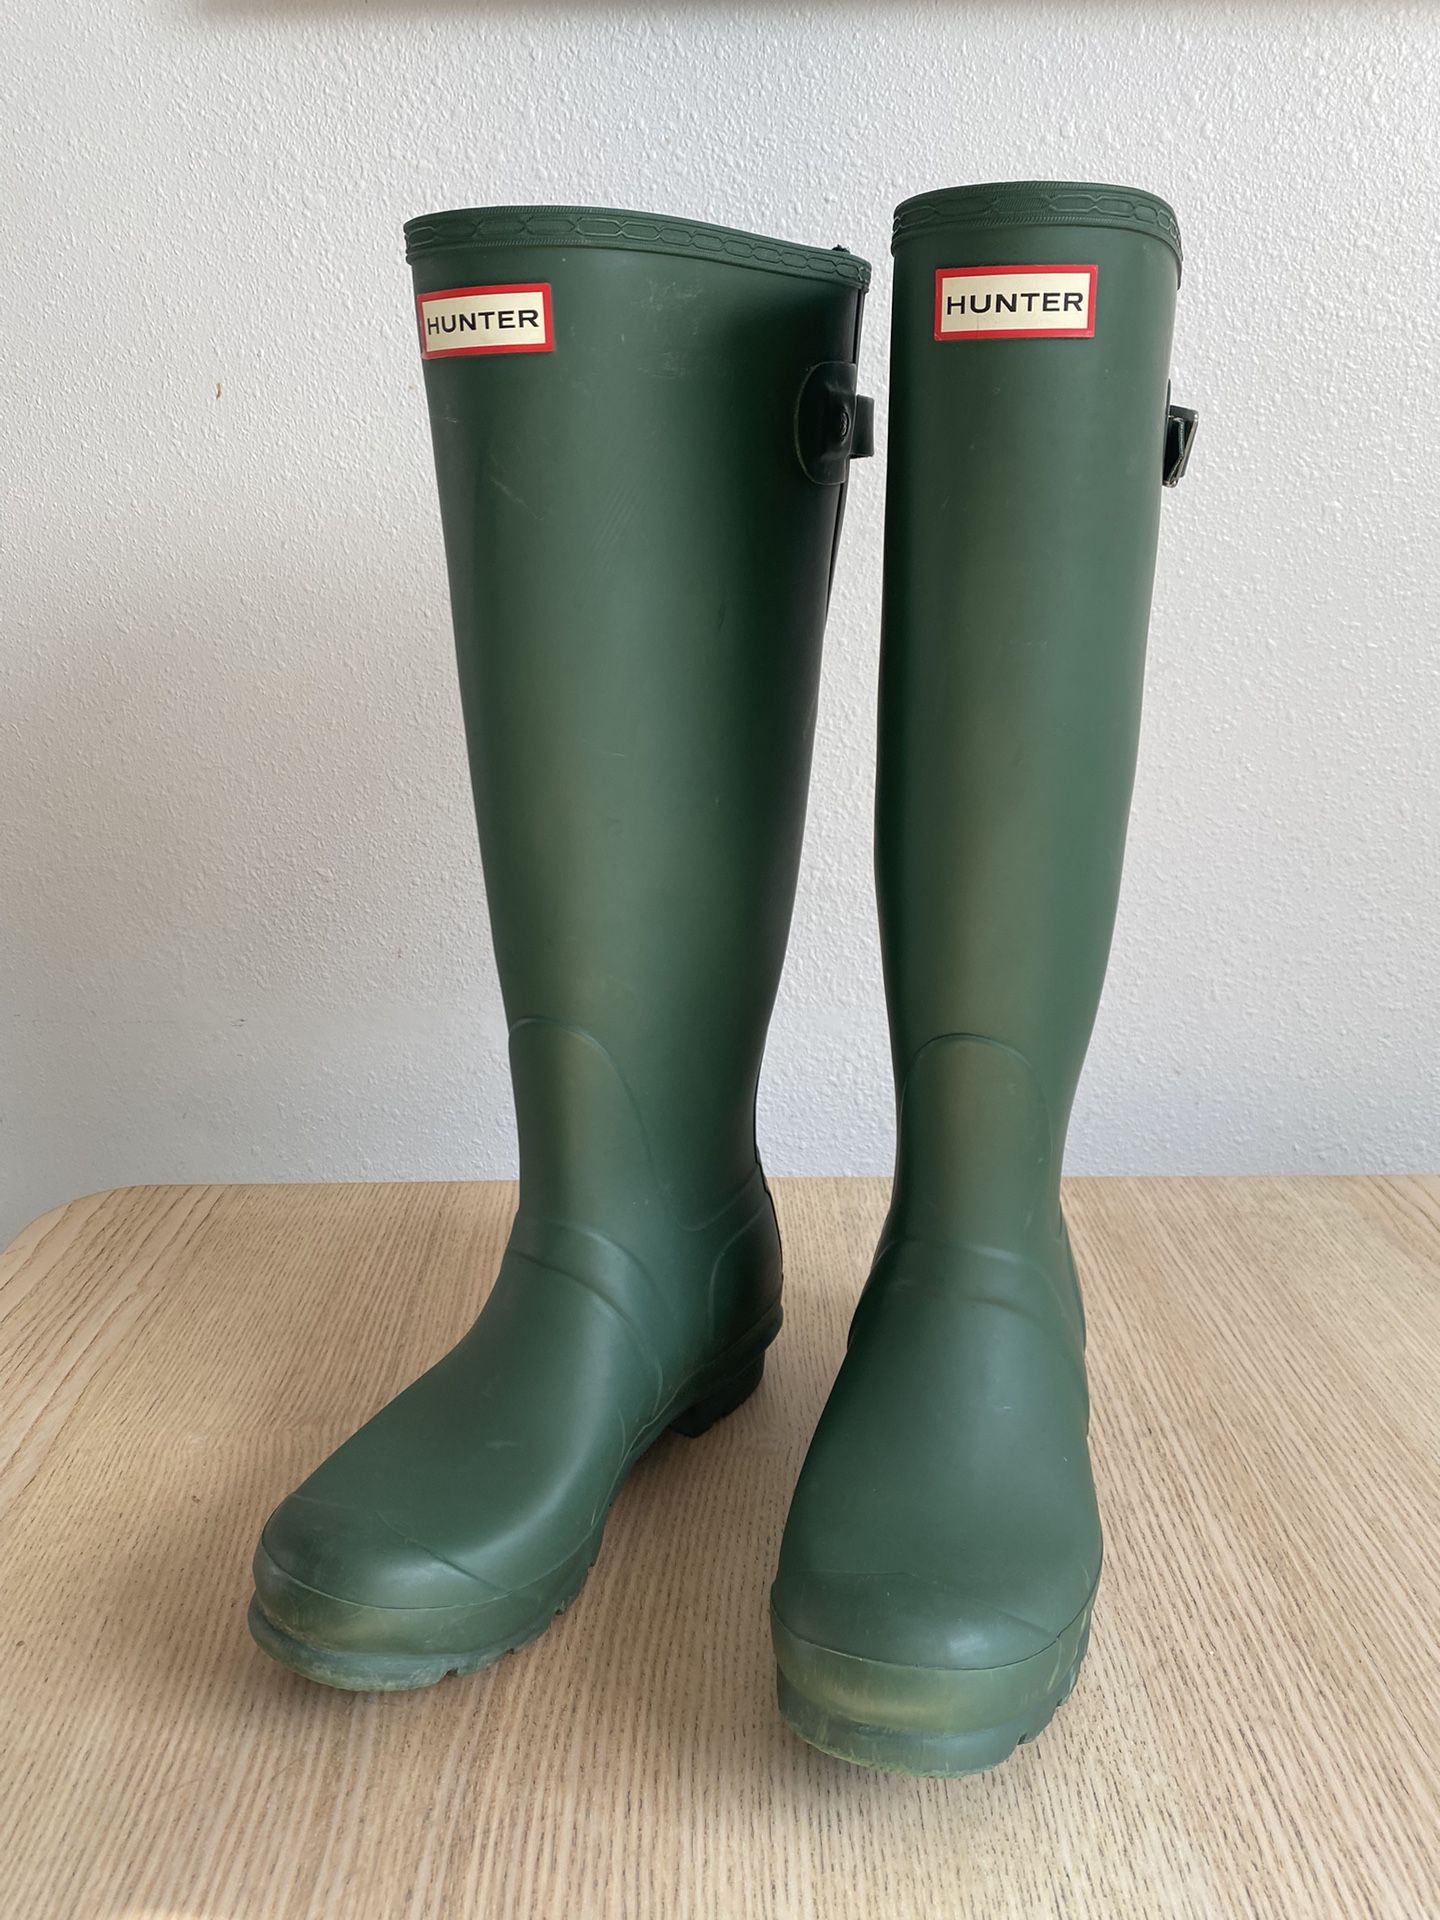 💥 HUNTER Rain Boots Womens 8 Green Adjustable